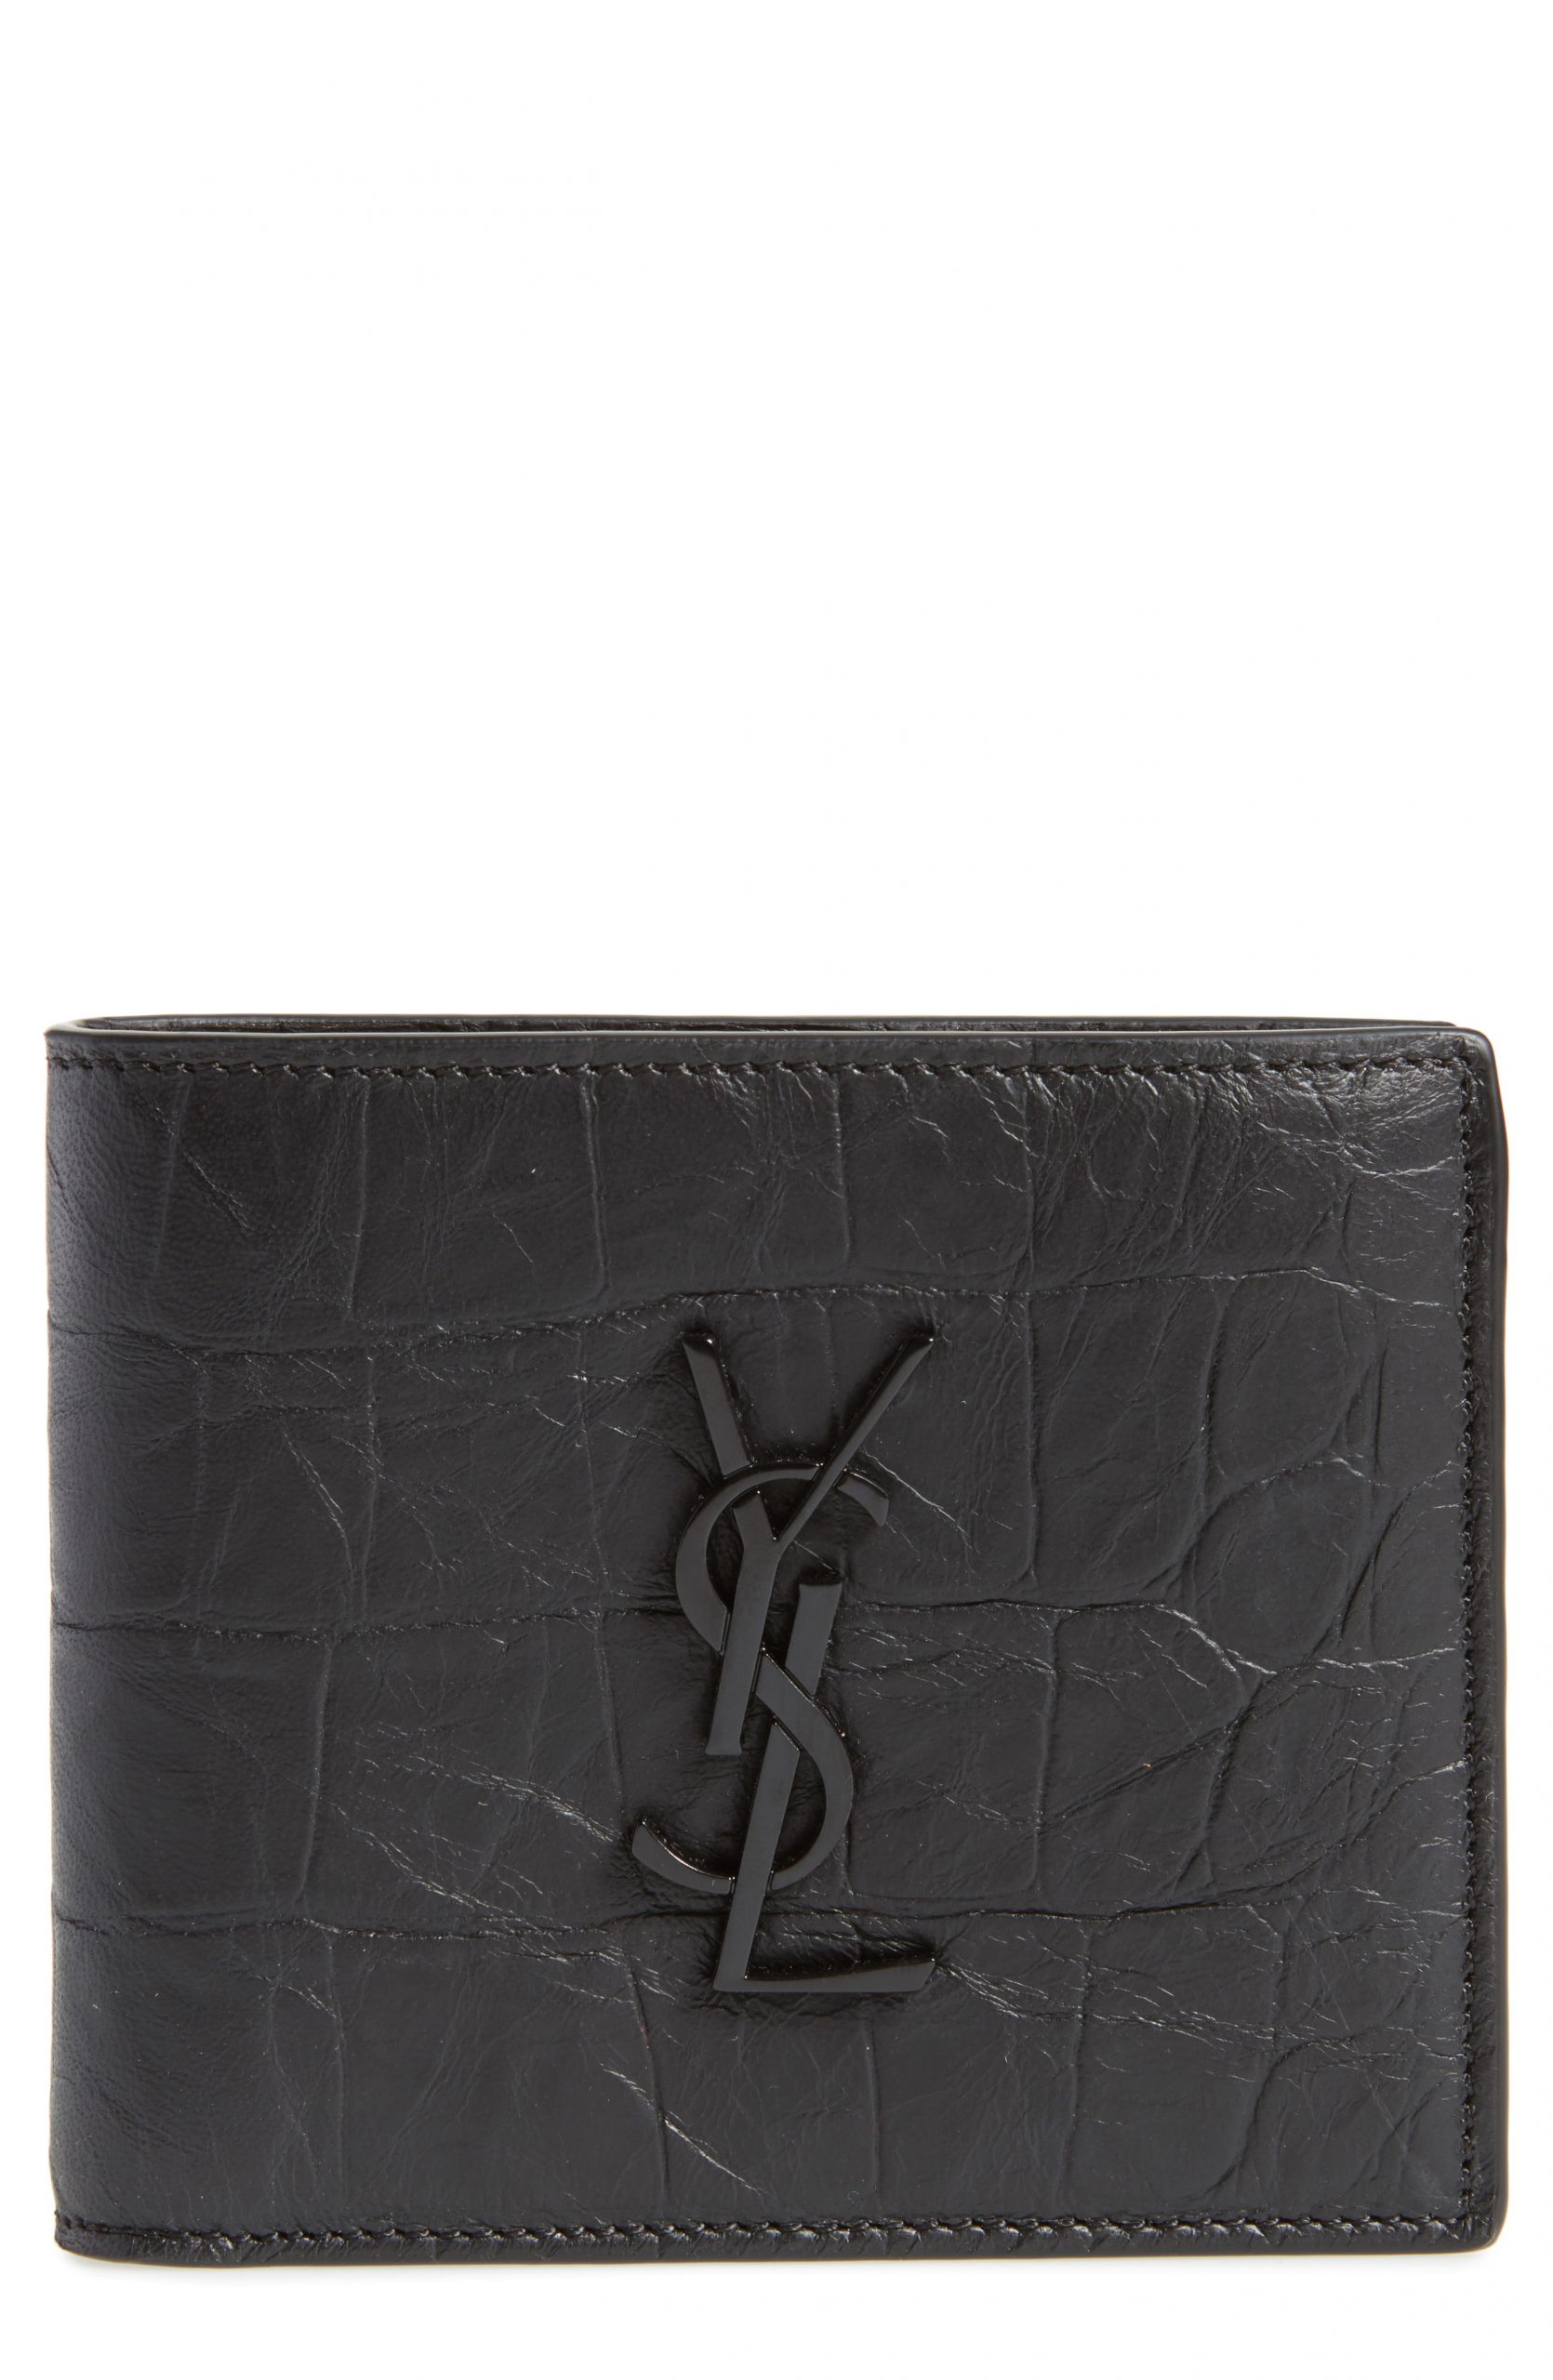 Men’s Saint Laurent Croc Embossed Leather Wallet – Black | The Fashionisto